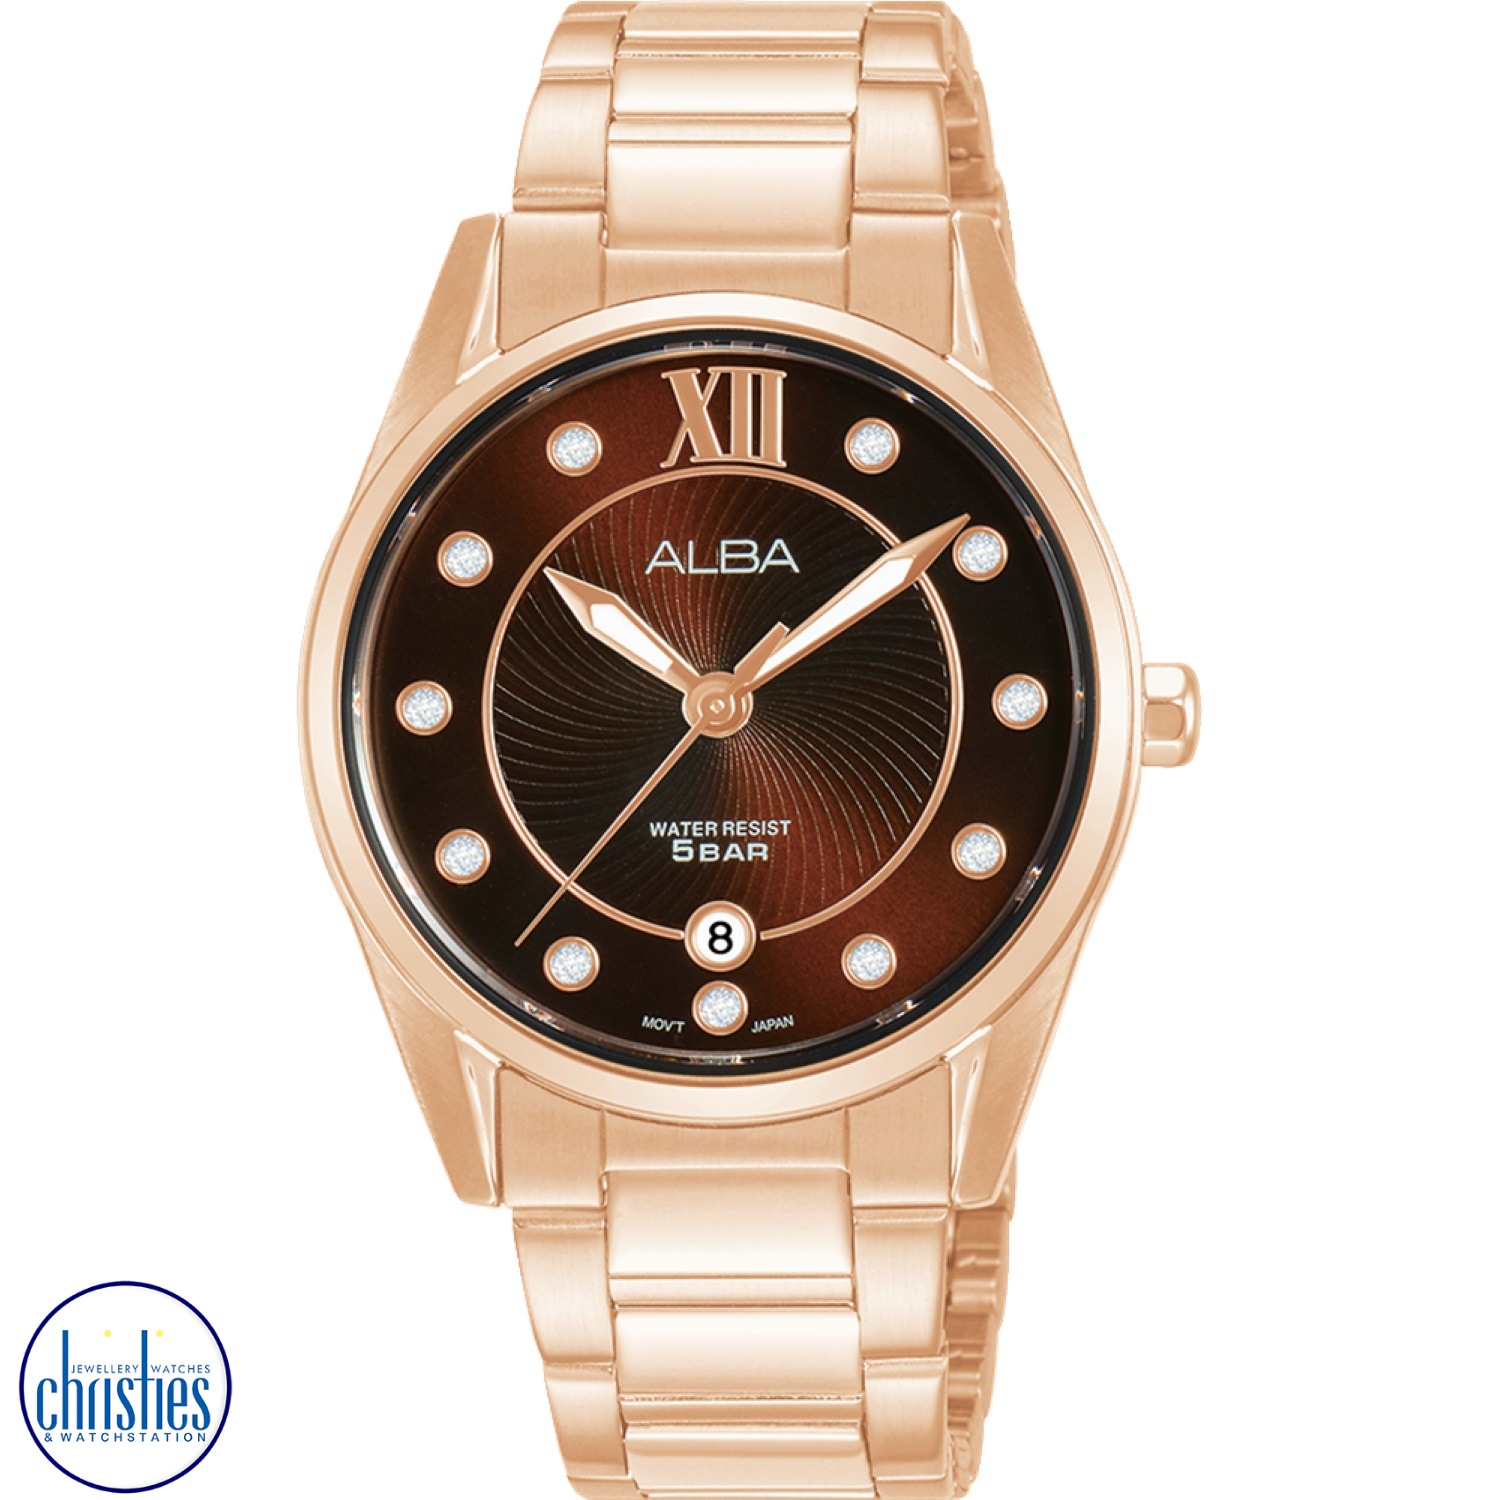 AG8M58X ALBA Prestige Watch ALBA watch original price